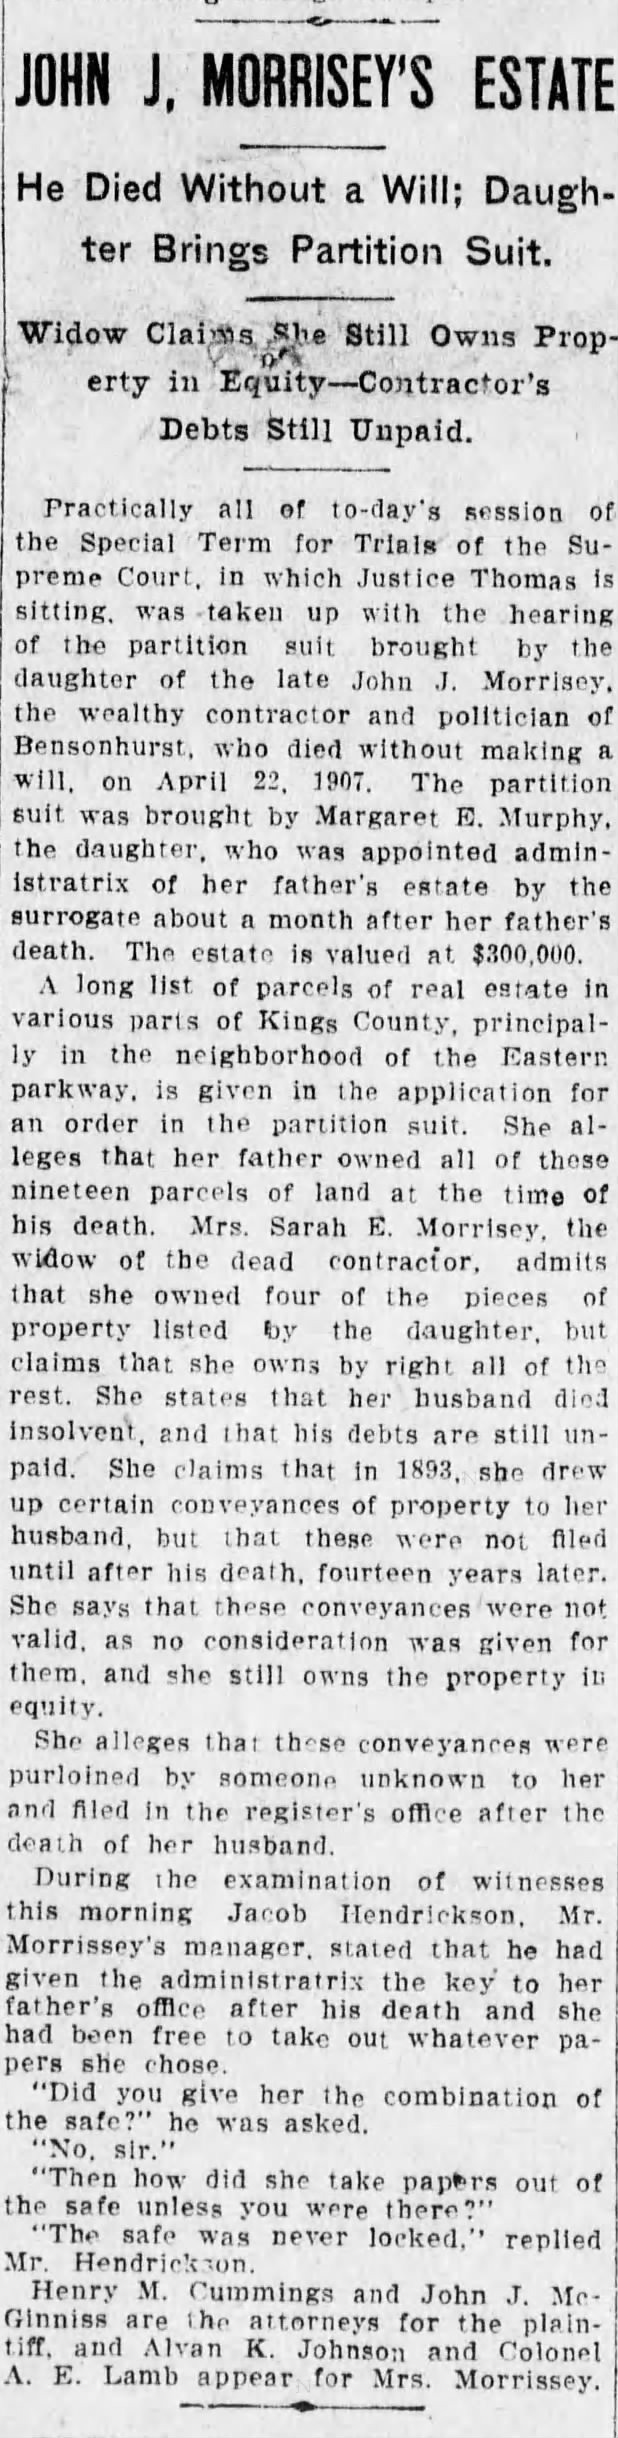 The Brooklyn Eagle March 9 1909. Margaret Murphy Lawsuit of John J Morrissey estate.